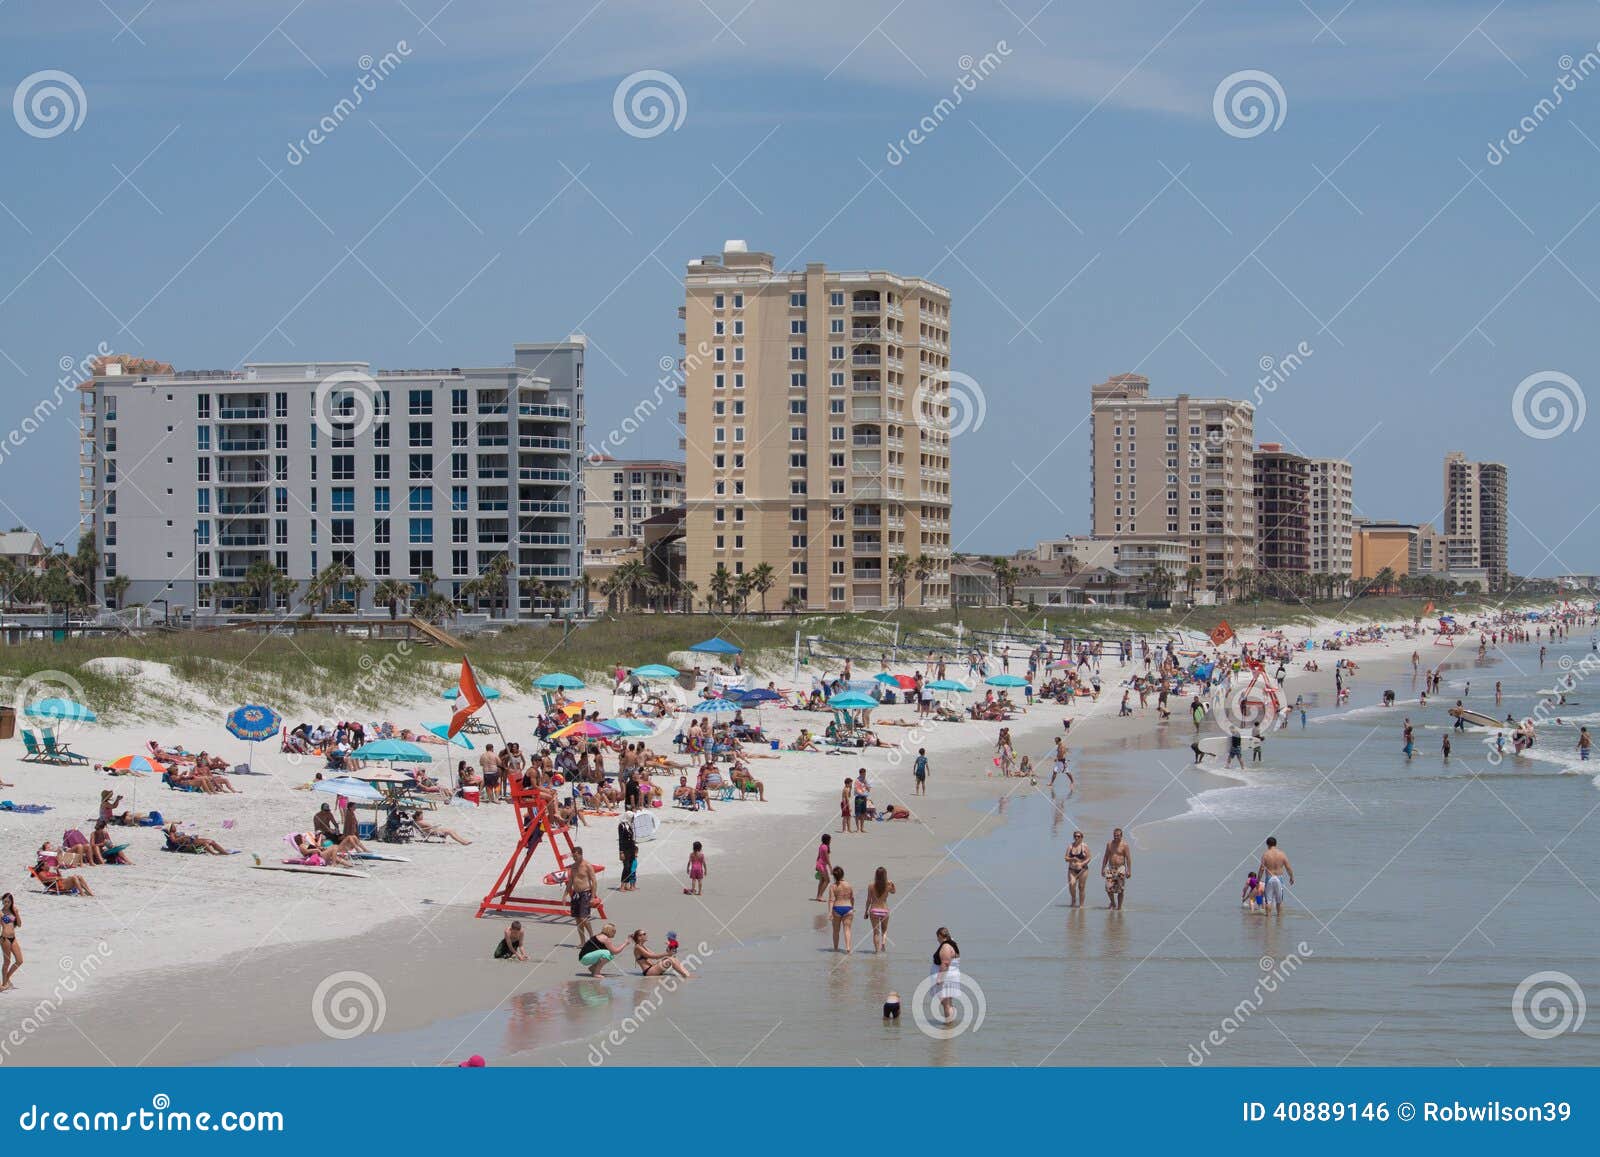 Praia de Jacksonville foto editorial. Imagem de grupo - 40889146